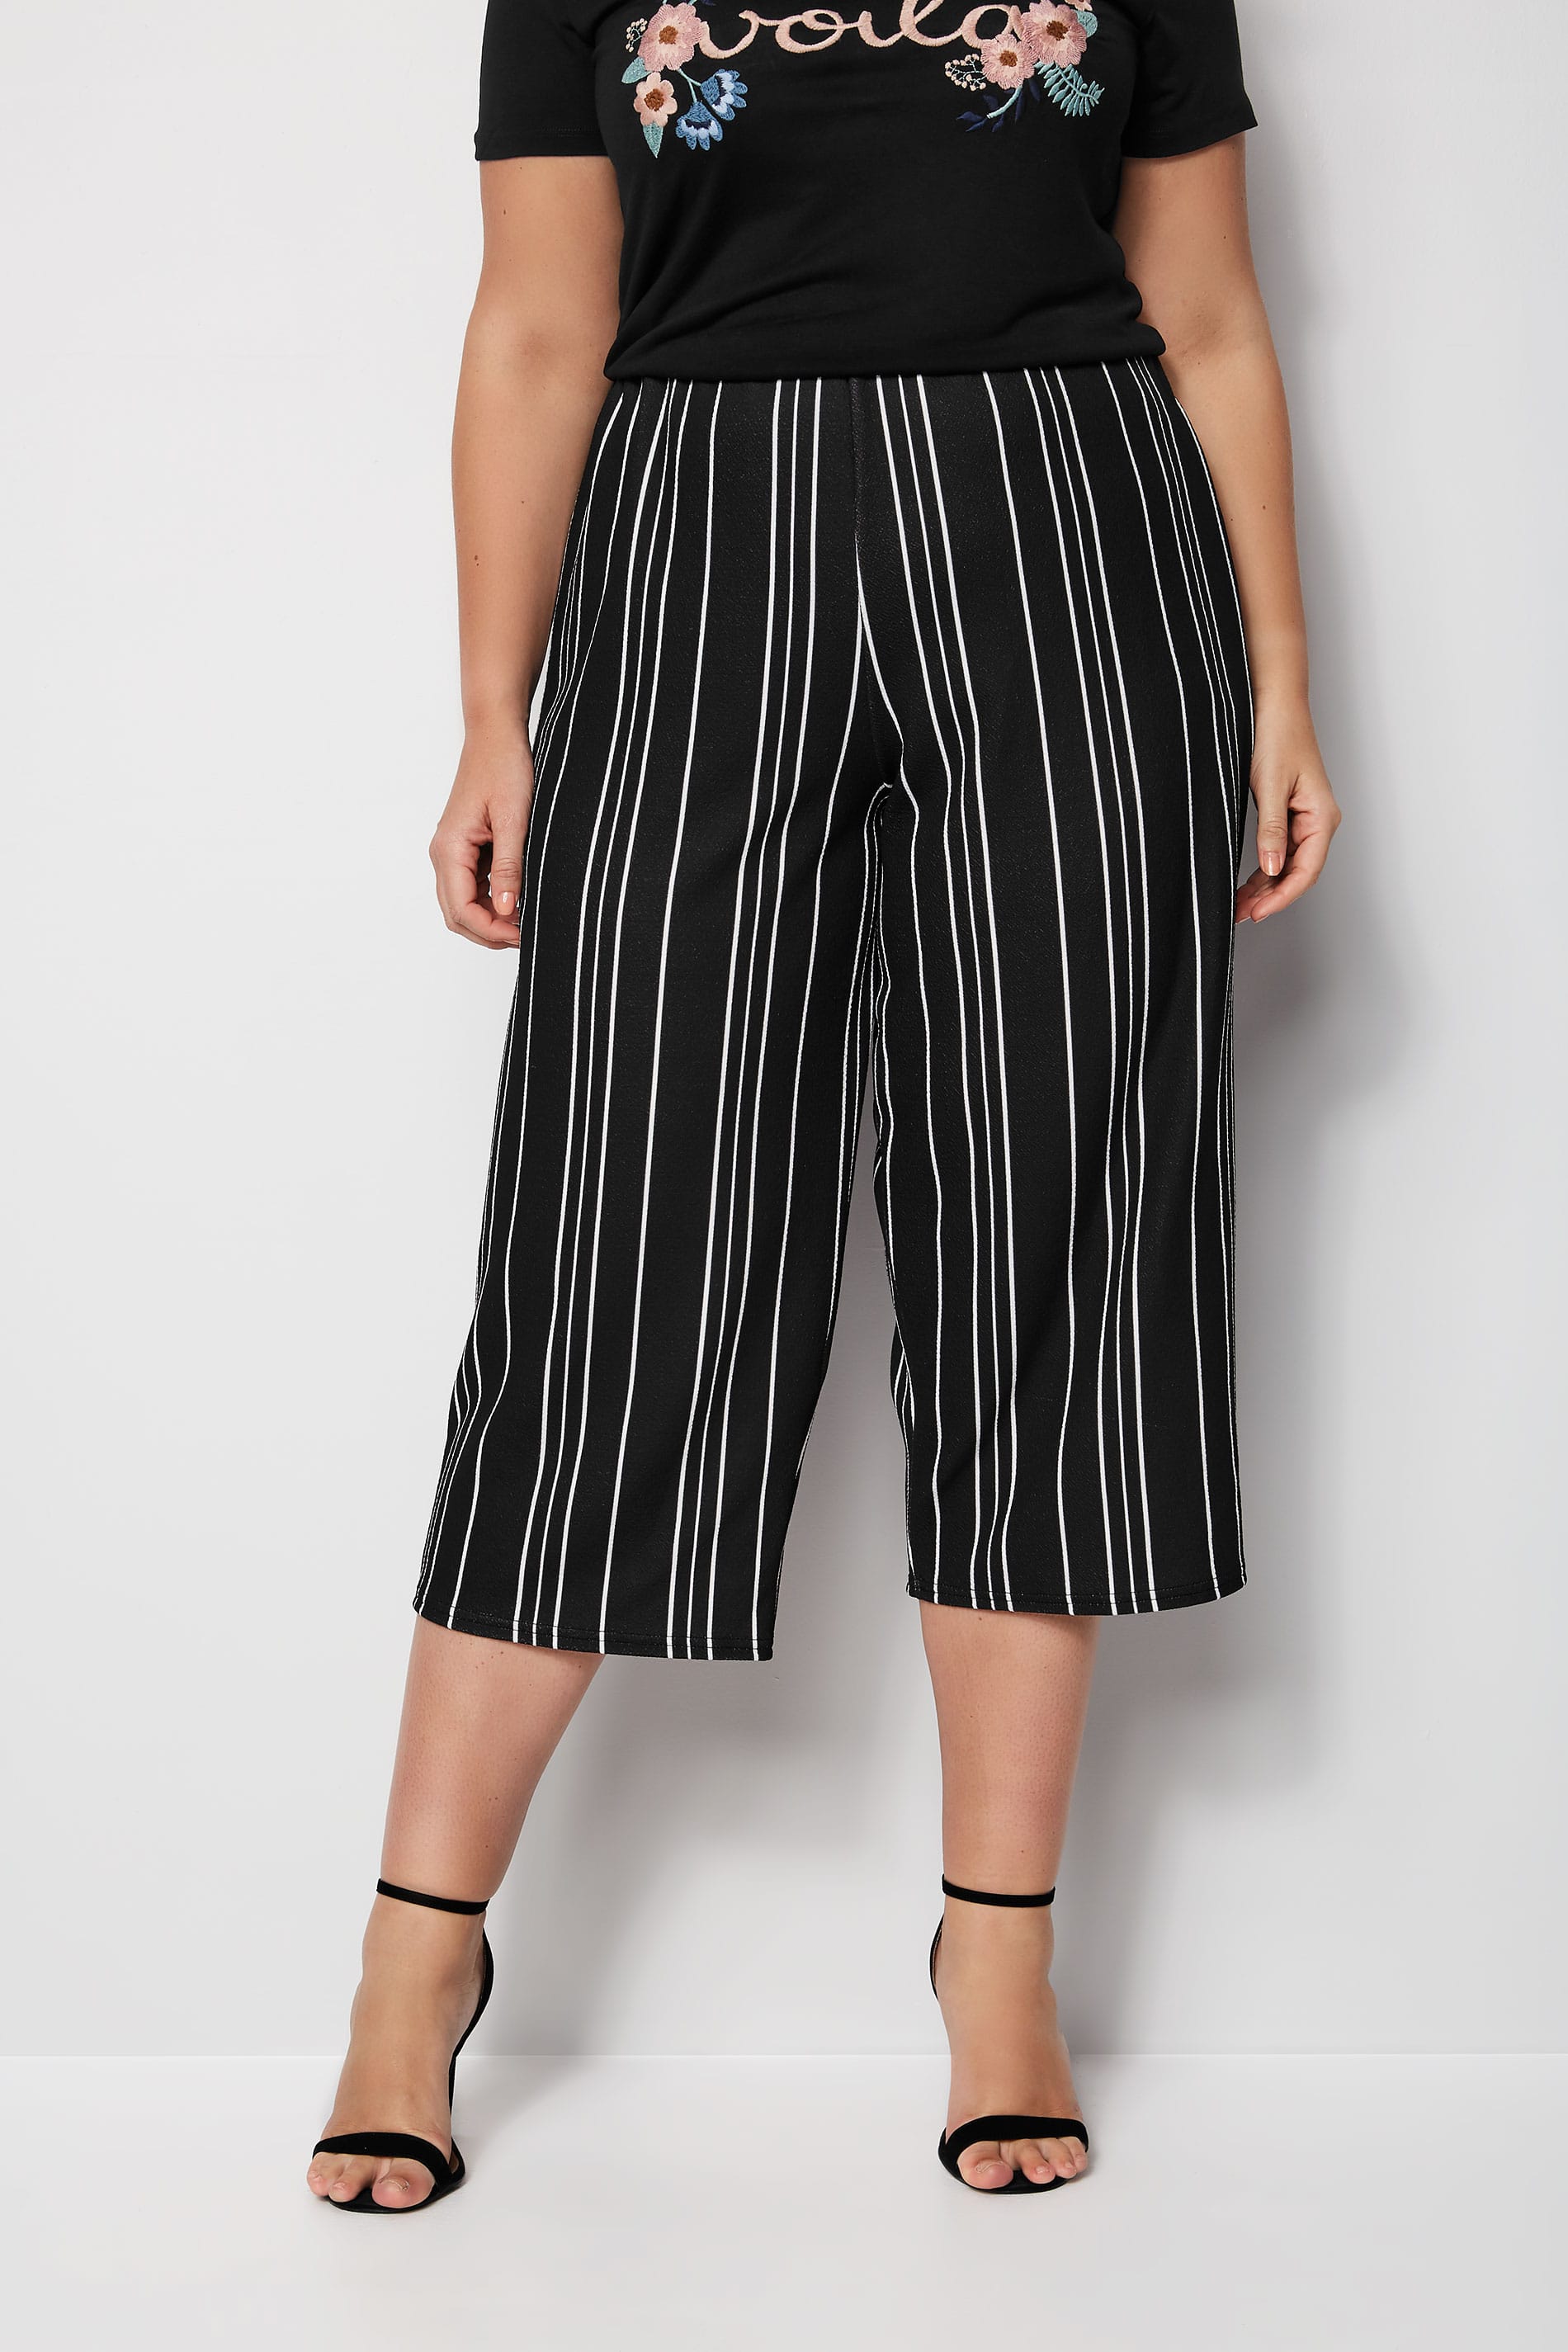 Black & White Striped Culottes, Plus size 16 to 36